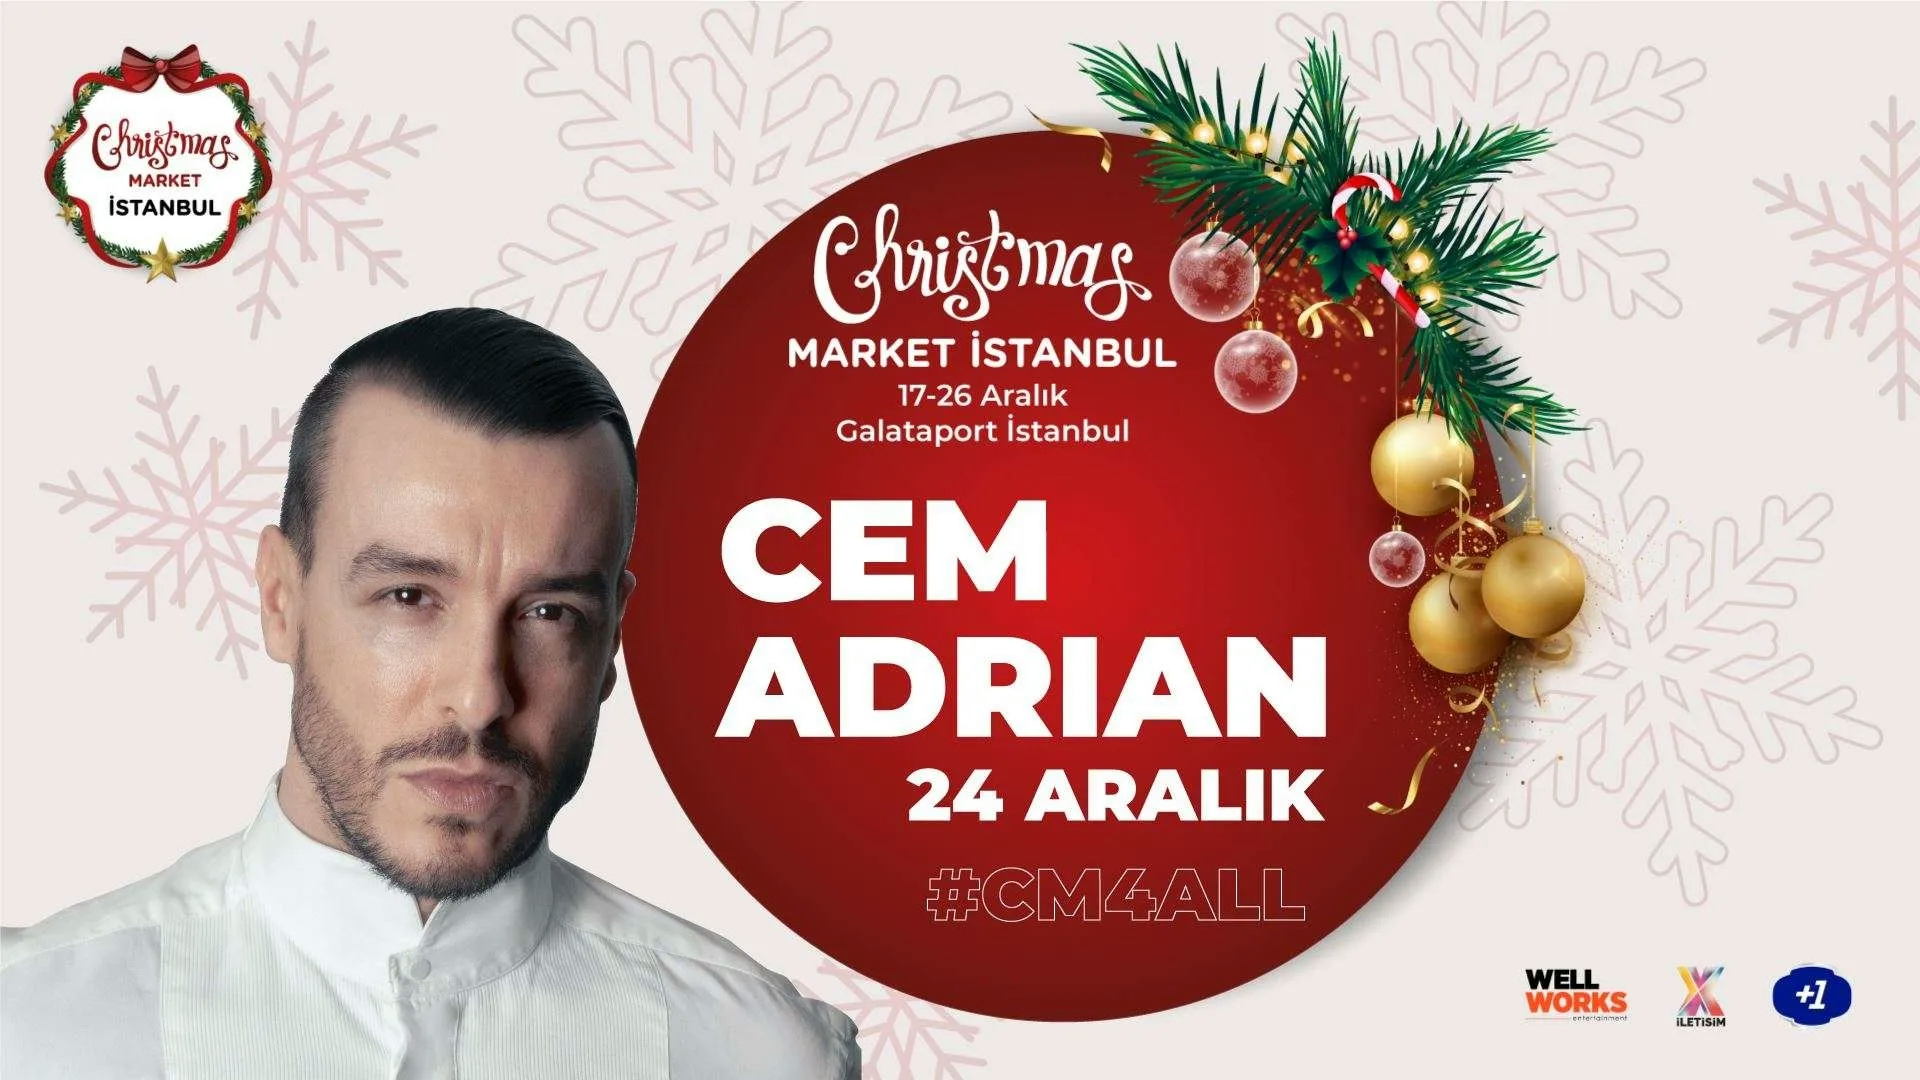 Cem Adrian - Christmas Market İstanbul